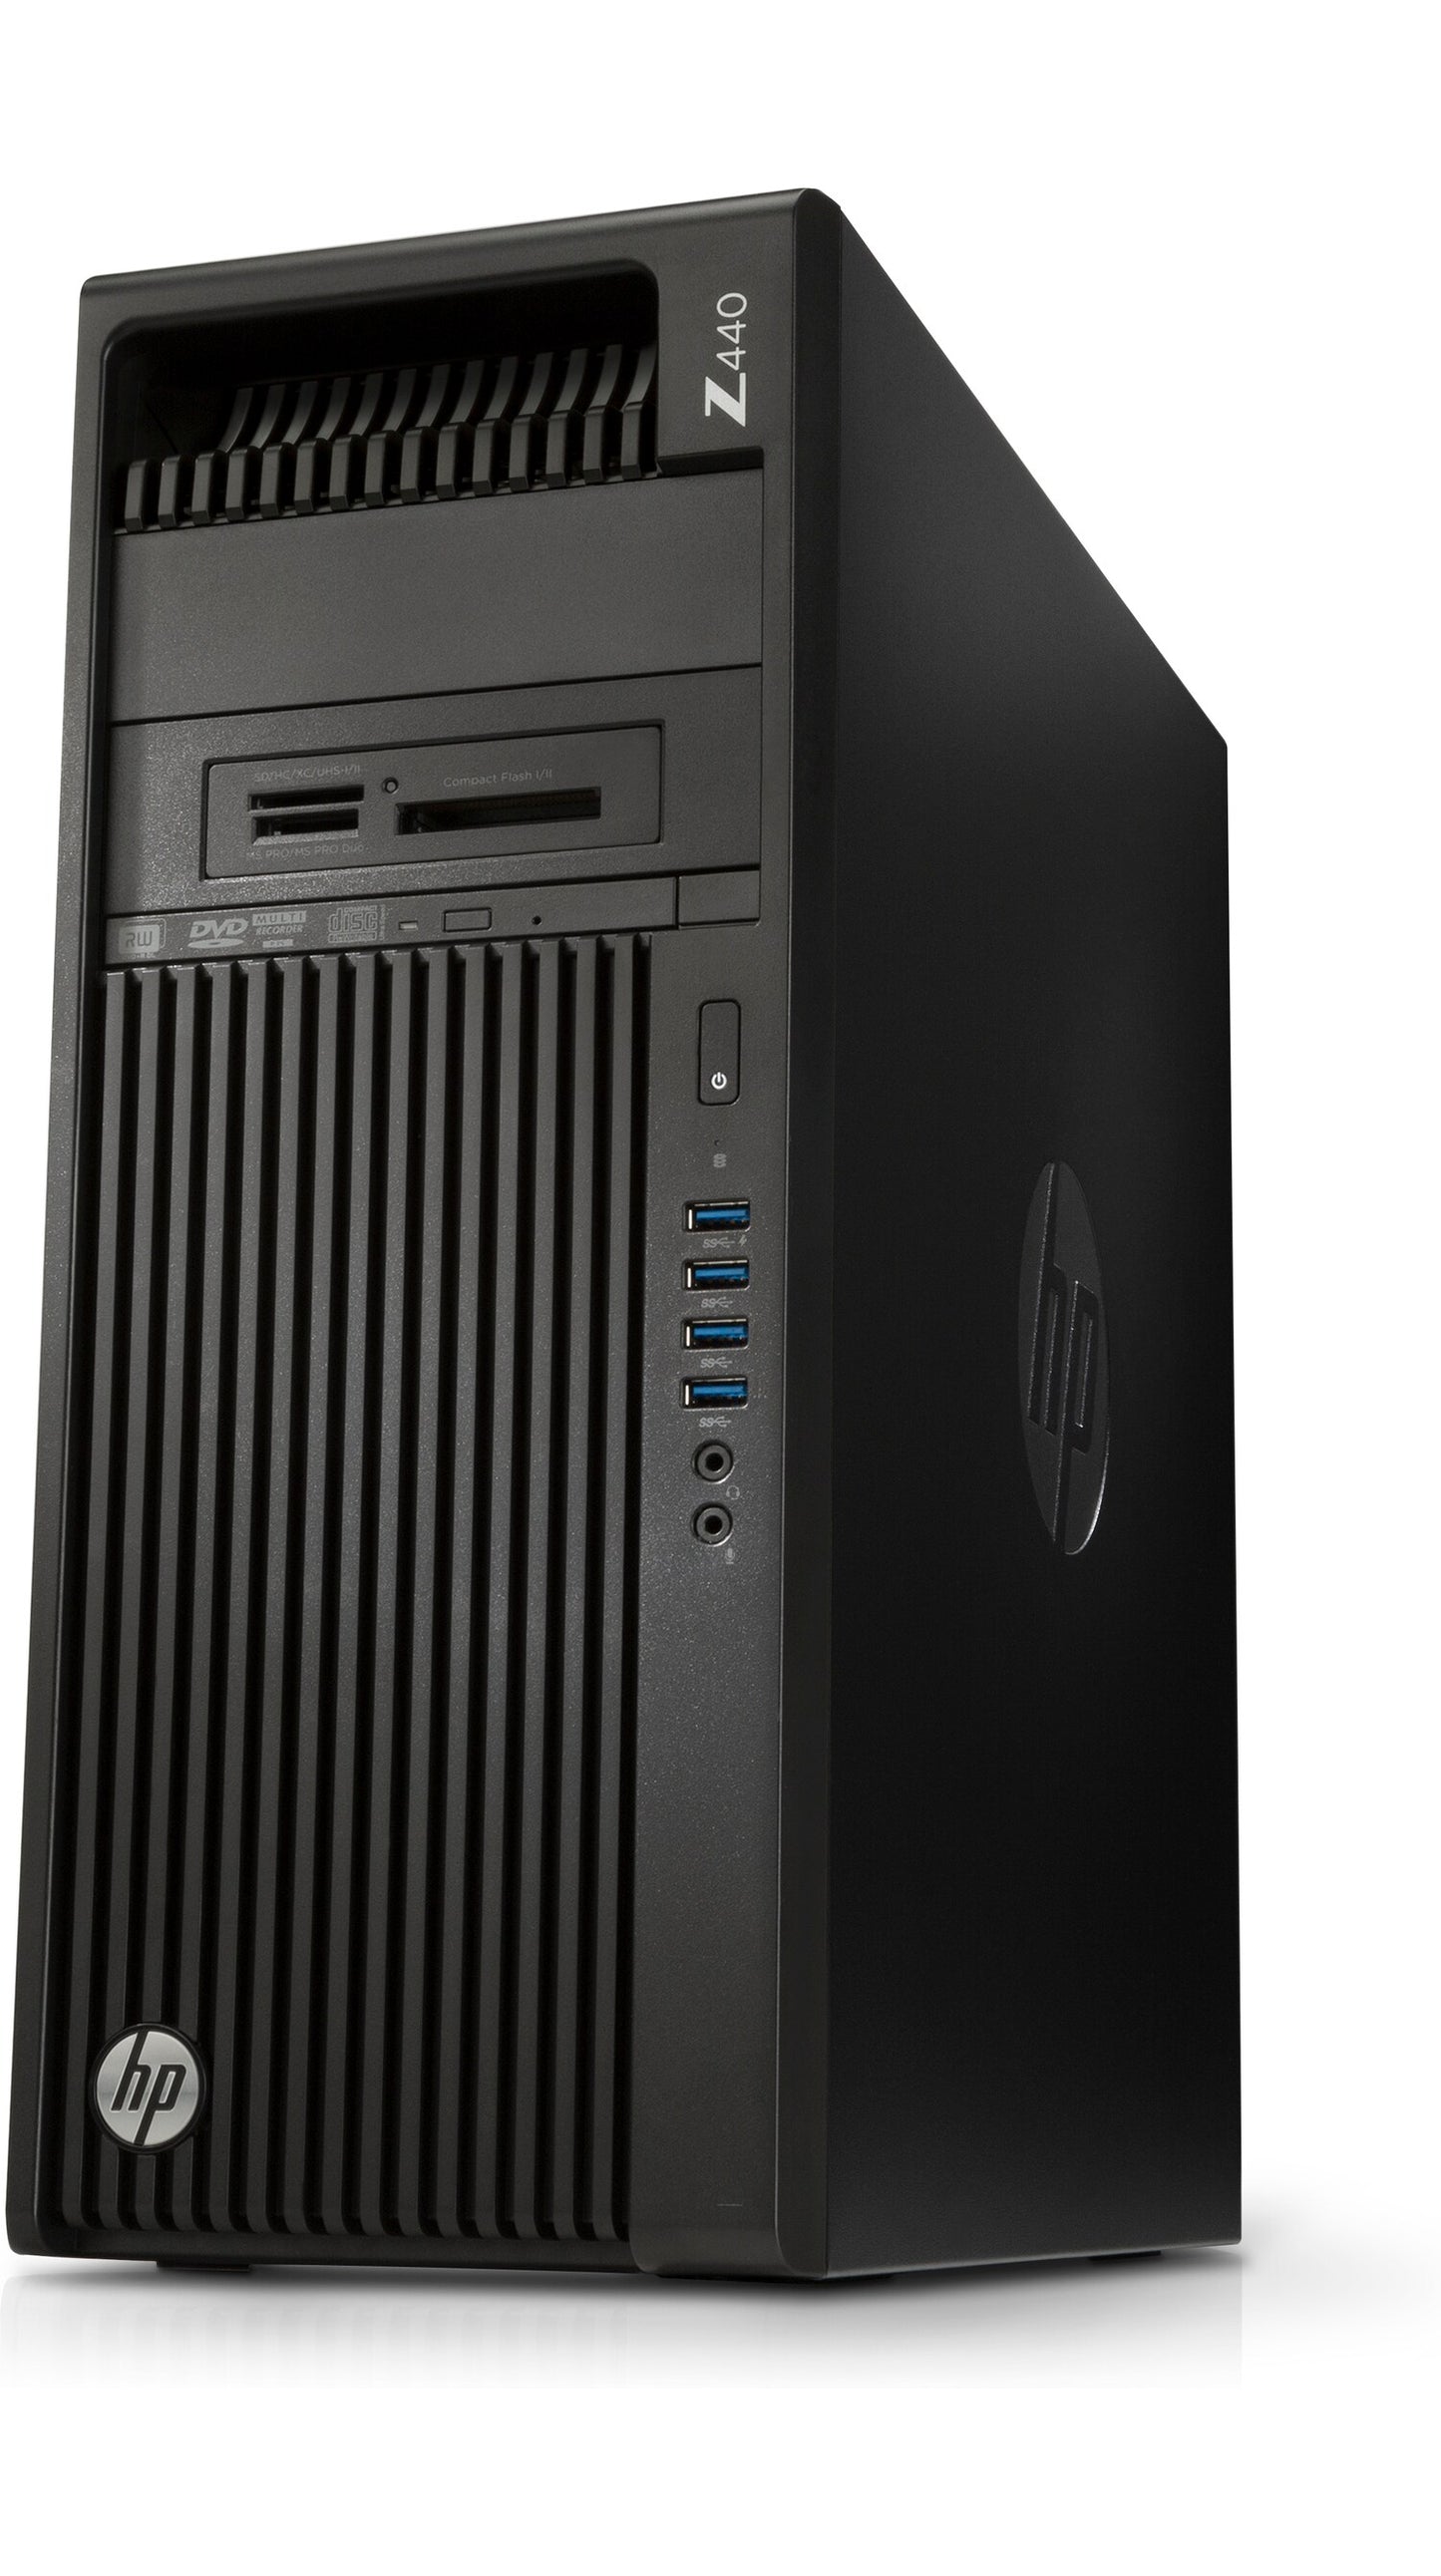 HP Z440 PC Intel Xeon 1650 3.5GHz 32GBRAM 256GB SSD Nvidia NVS310 Windows 10 Pro